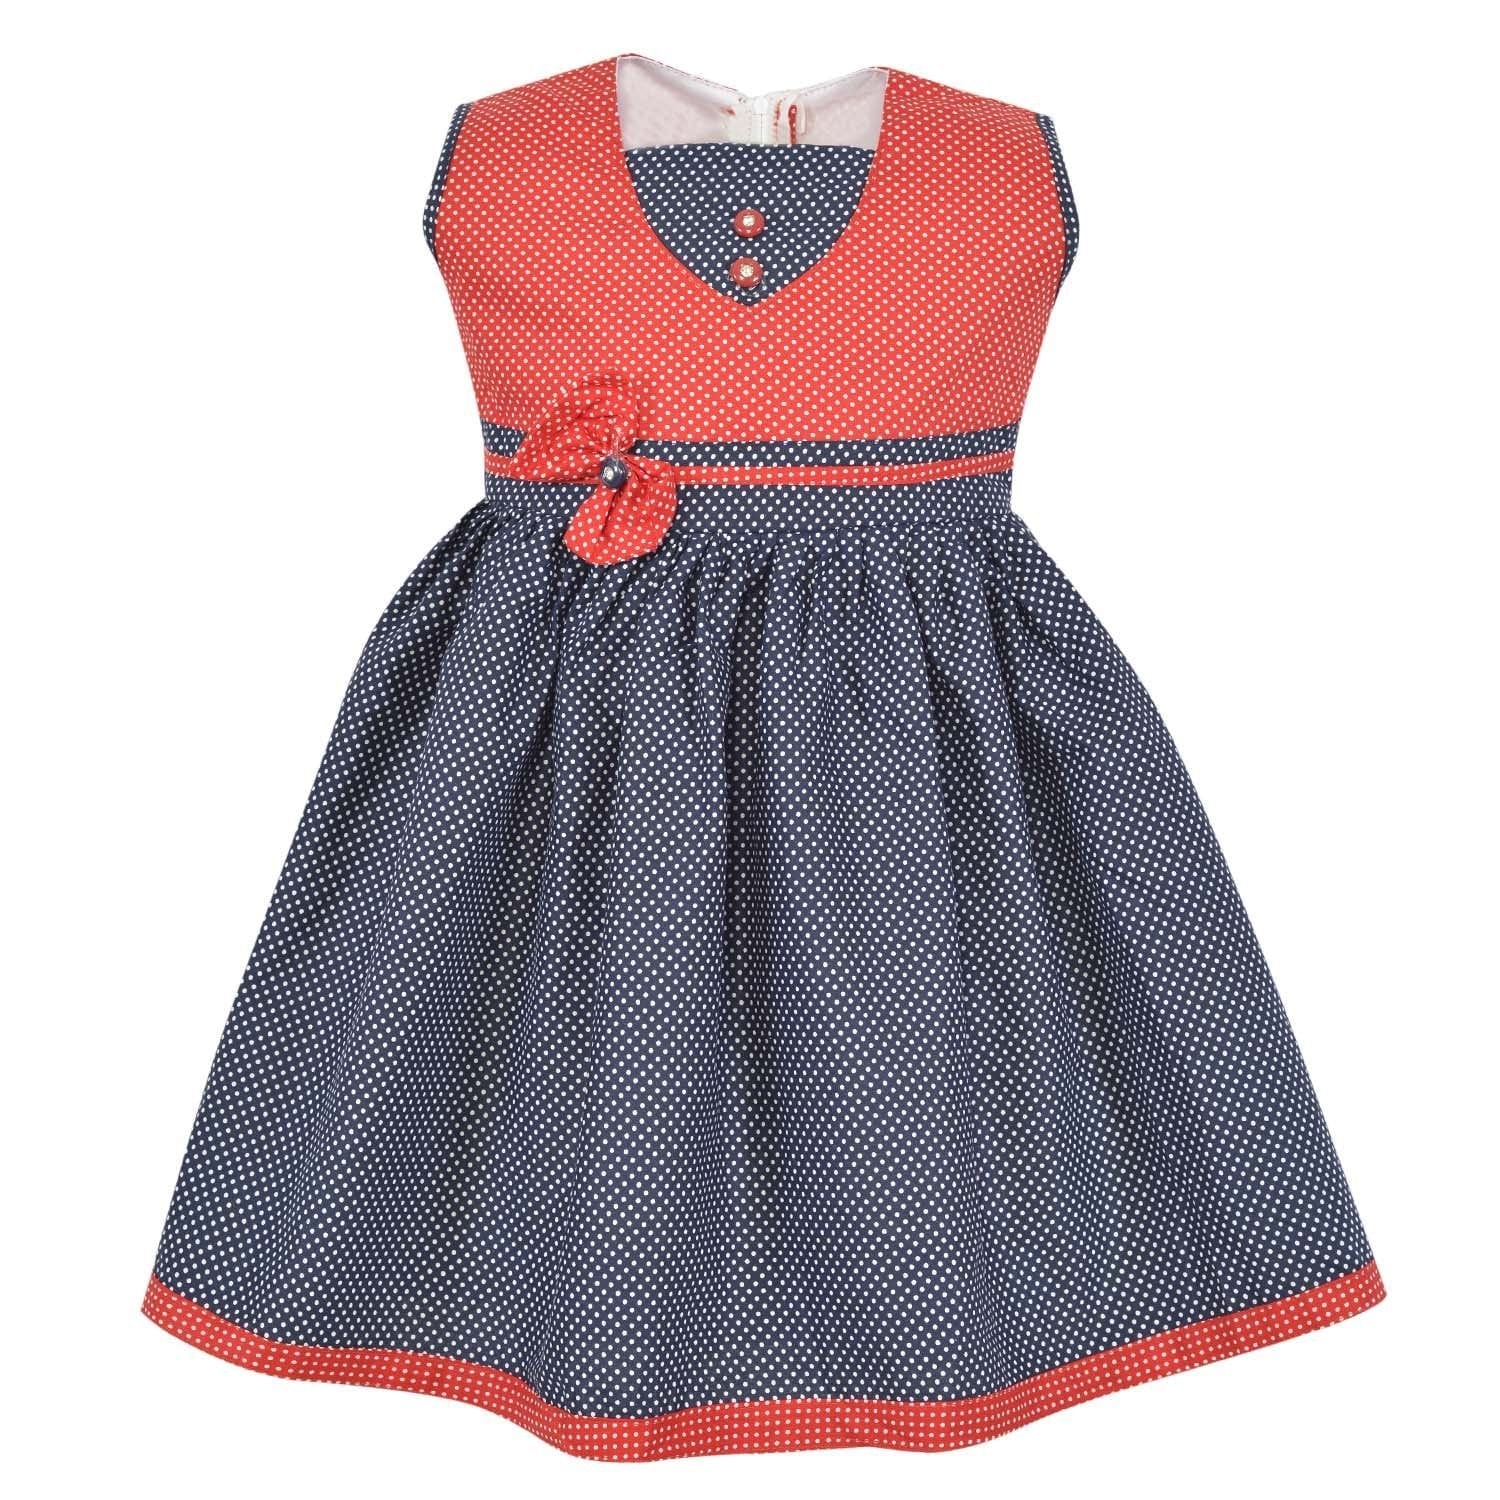 Baby Girls Dress ctn258nb - Wish Karo Cotton Wear - frocks Cotton Wear - baby dress